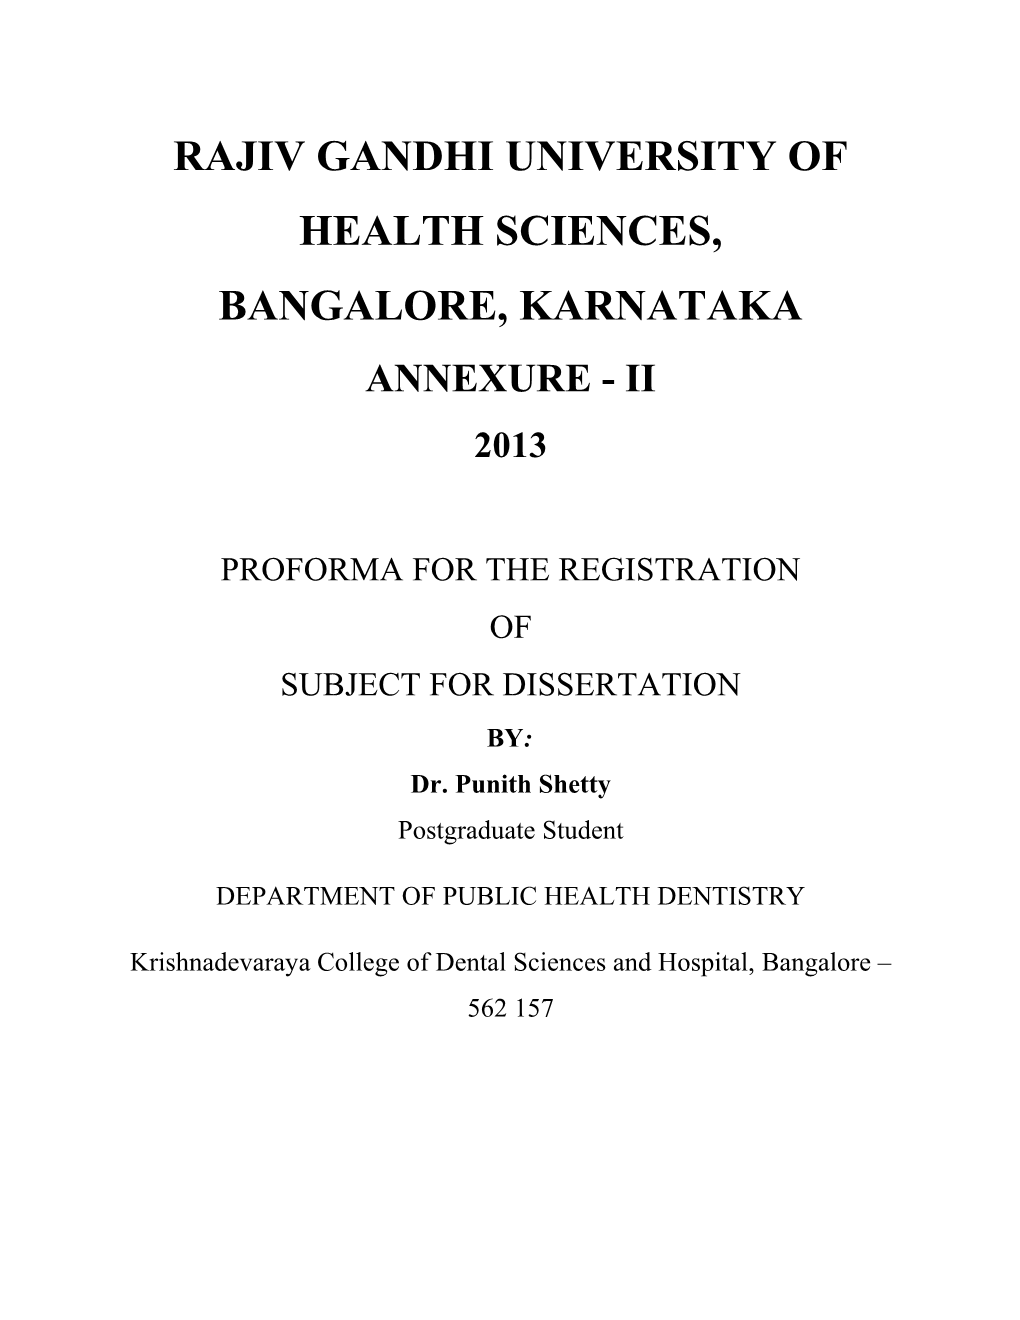 Rajiv Gandhi University of Health Sciences s185